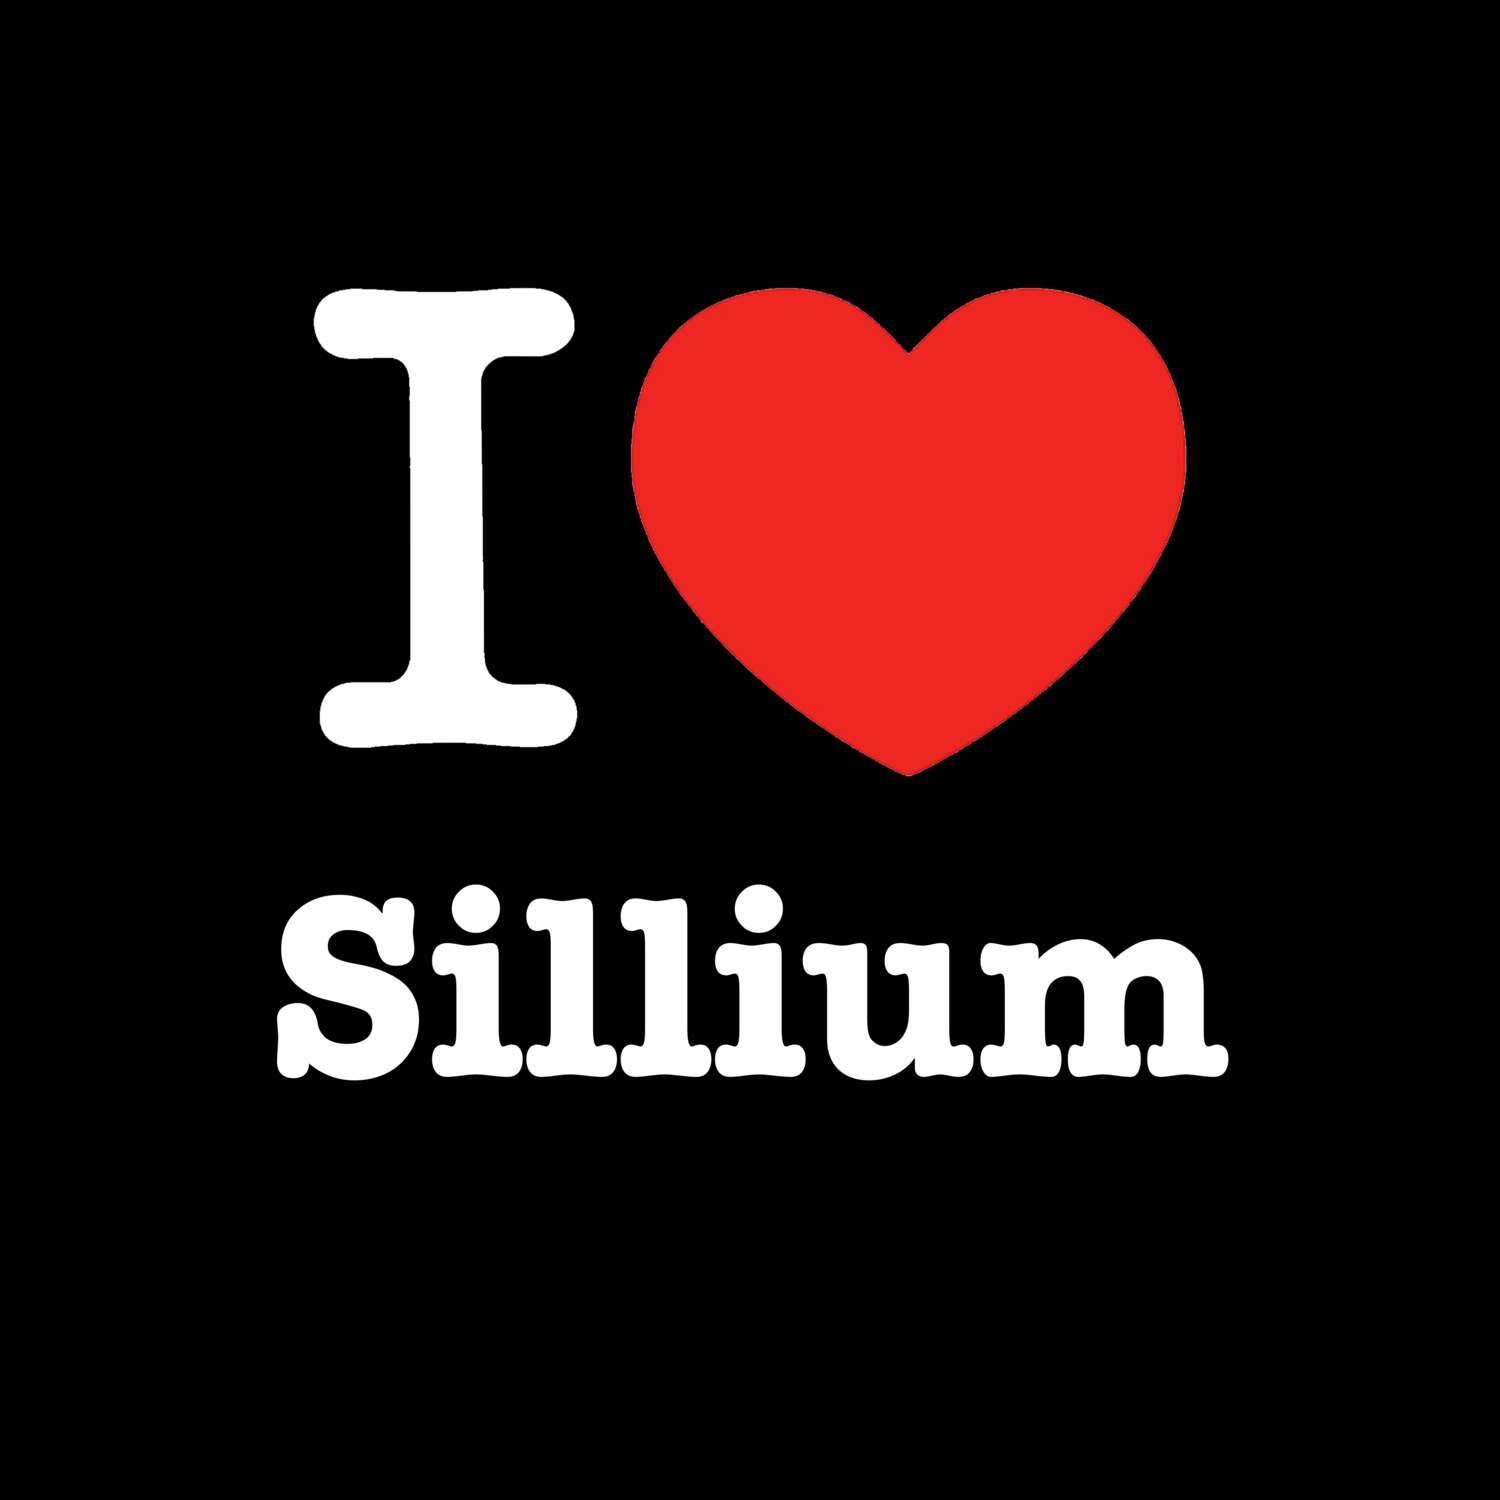 Sillium T-Shirt »I love«